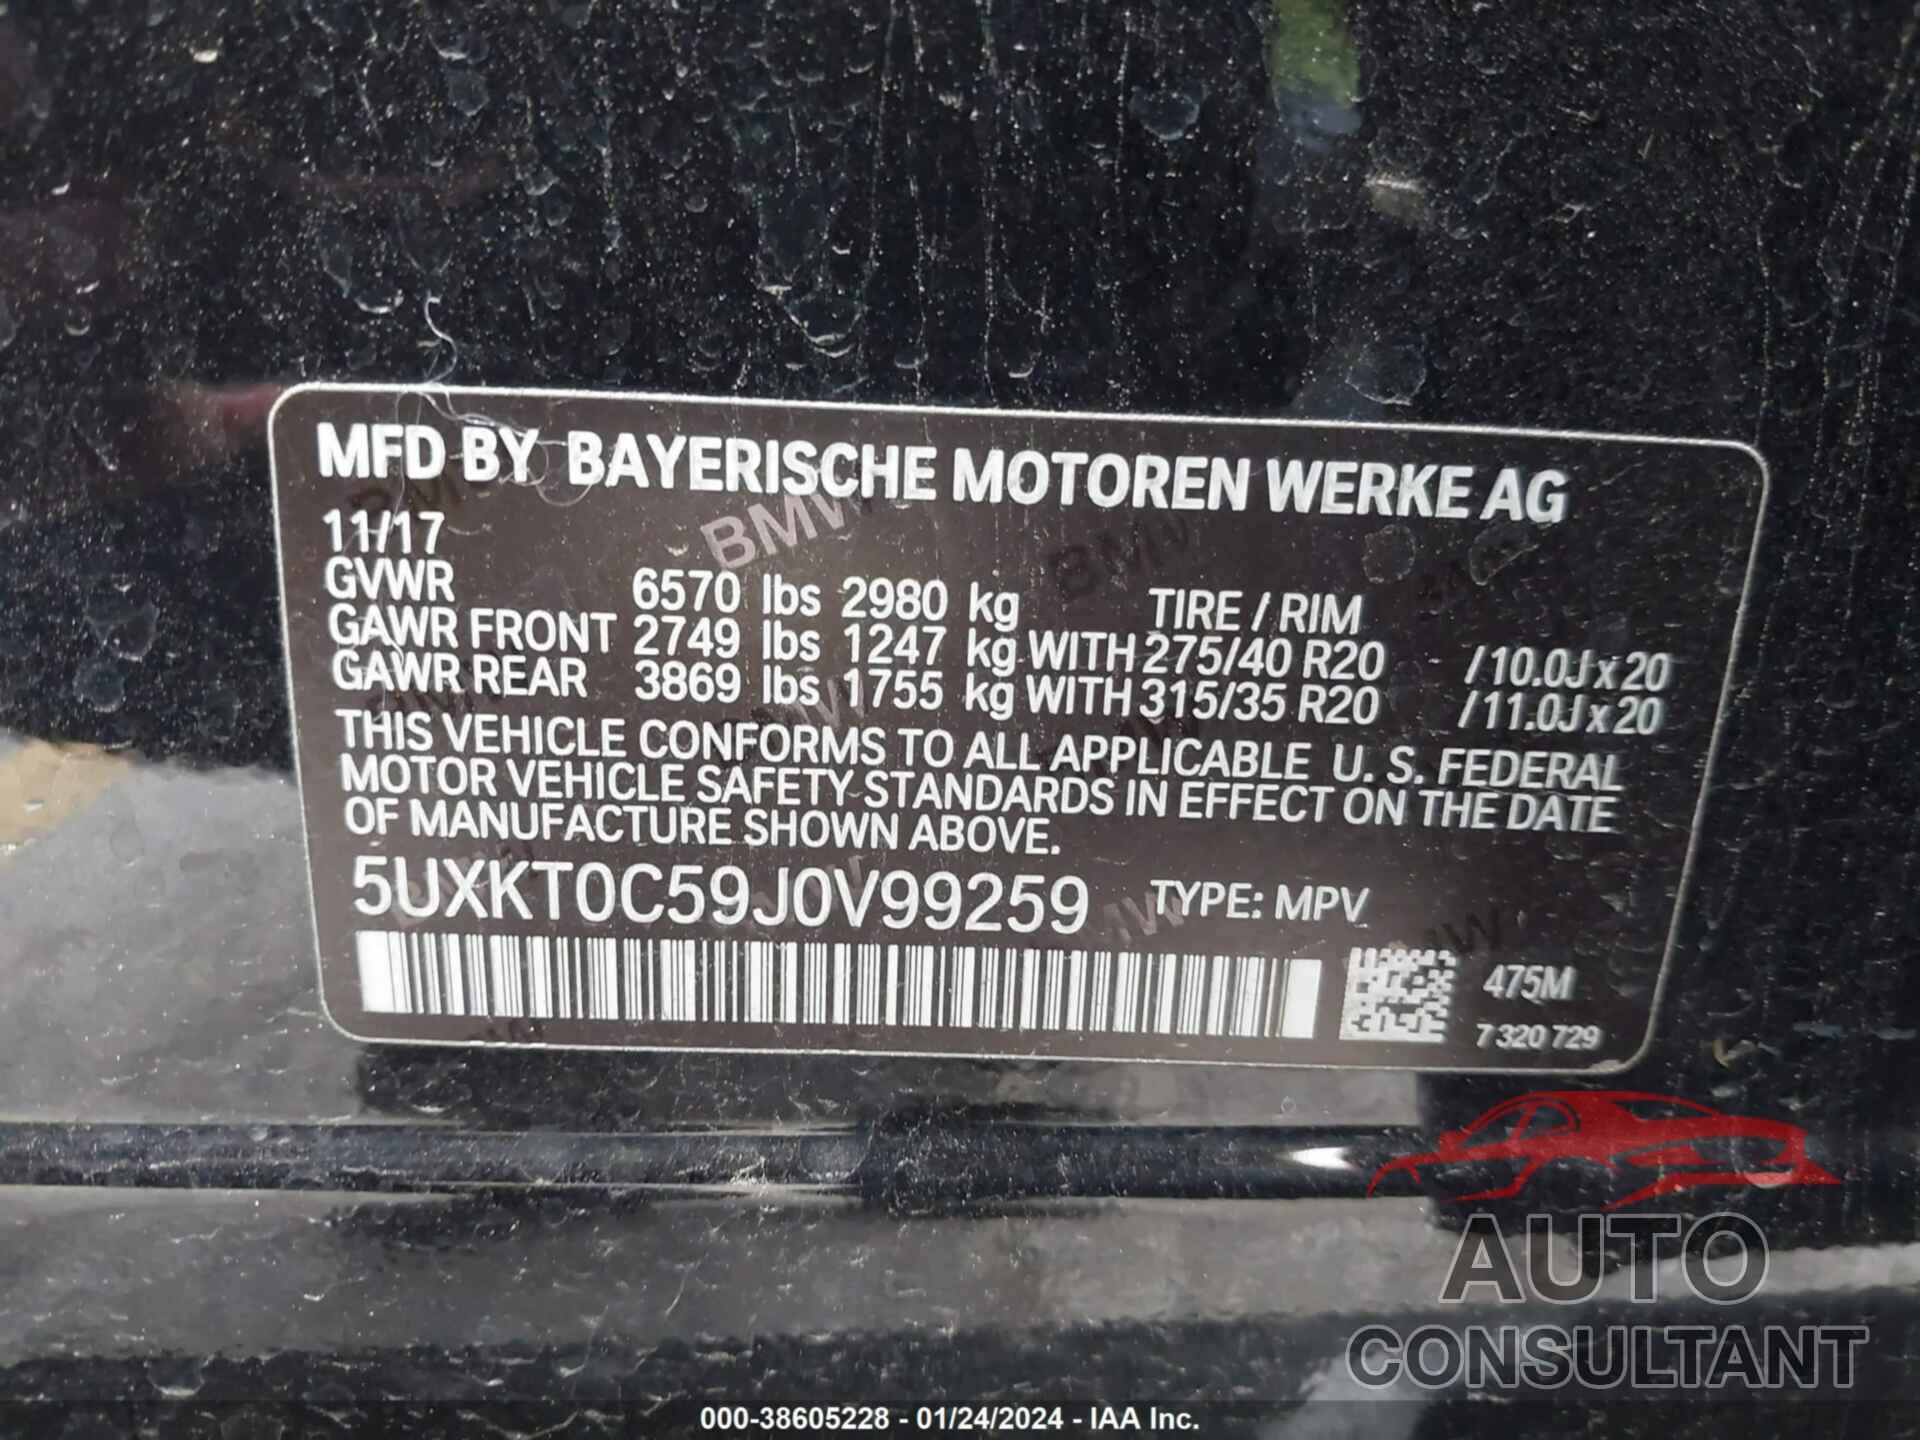 BMW X5 EDRIVE 2018 - 5UXKT0C59J0V99259